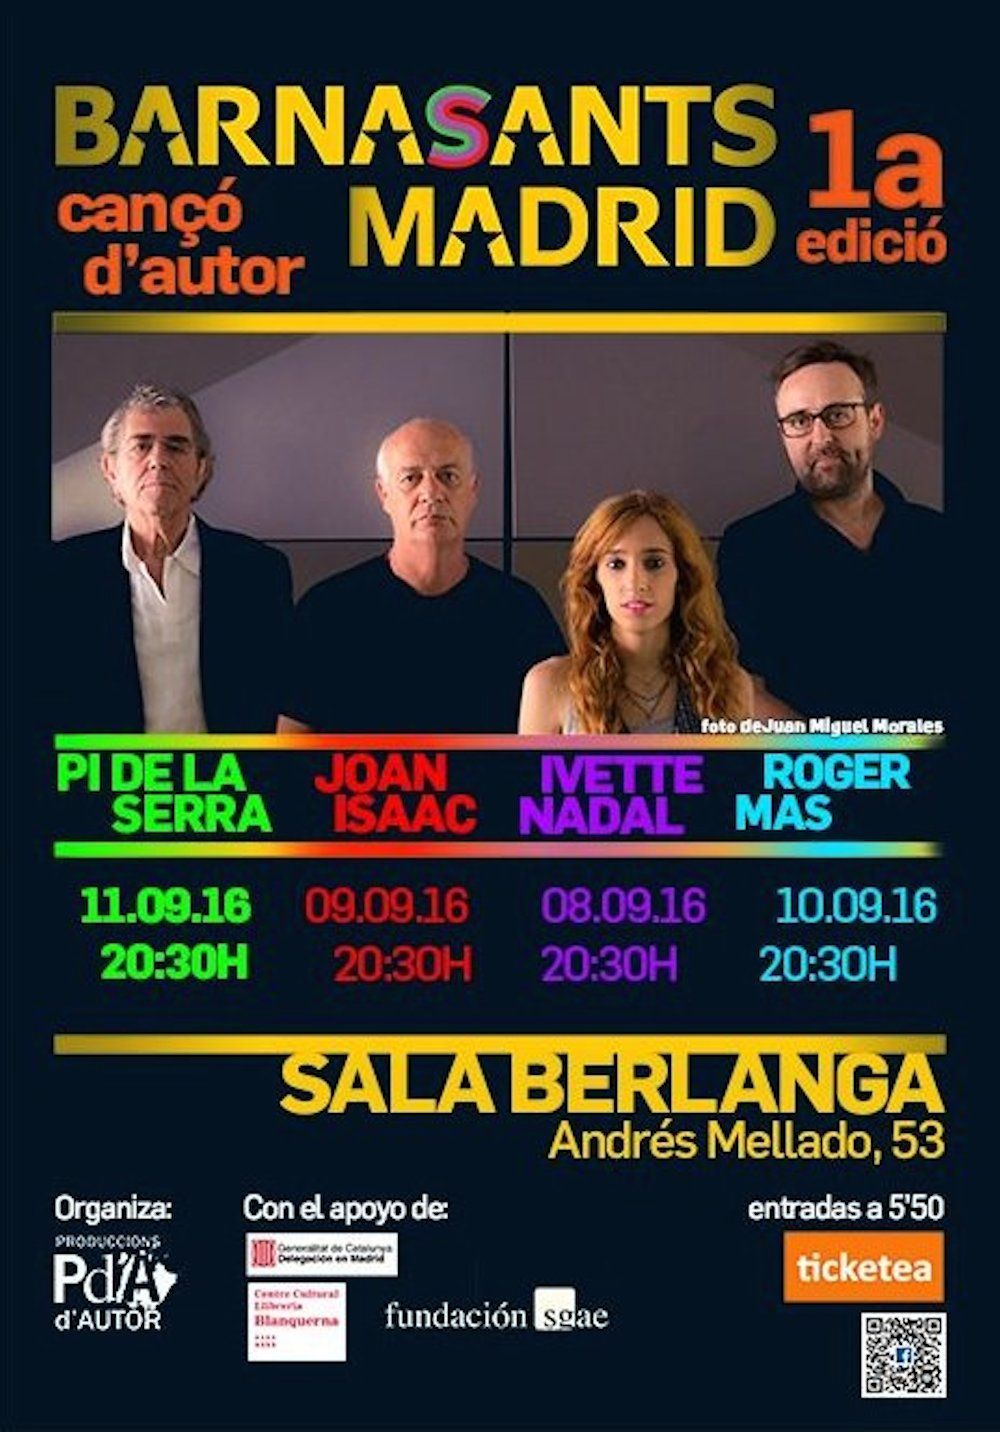 El festival Barnasants toma Madrid por la Diada